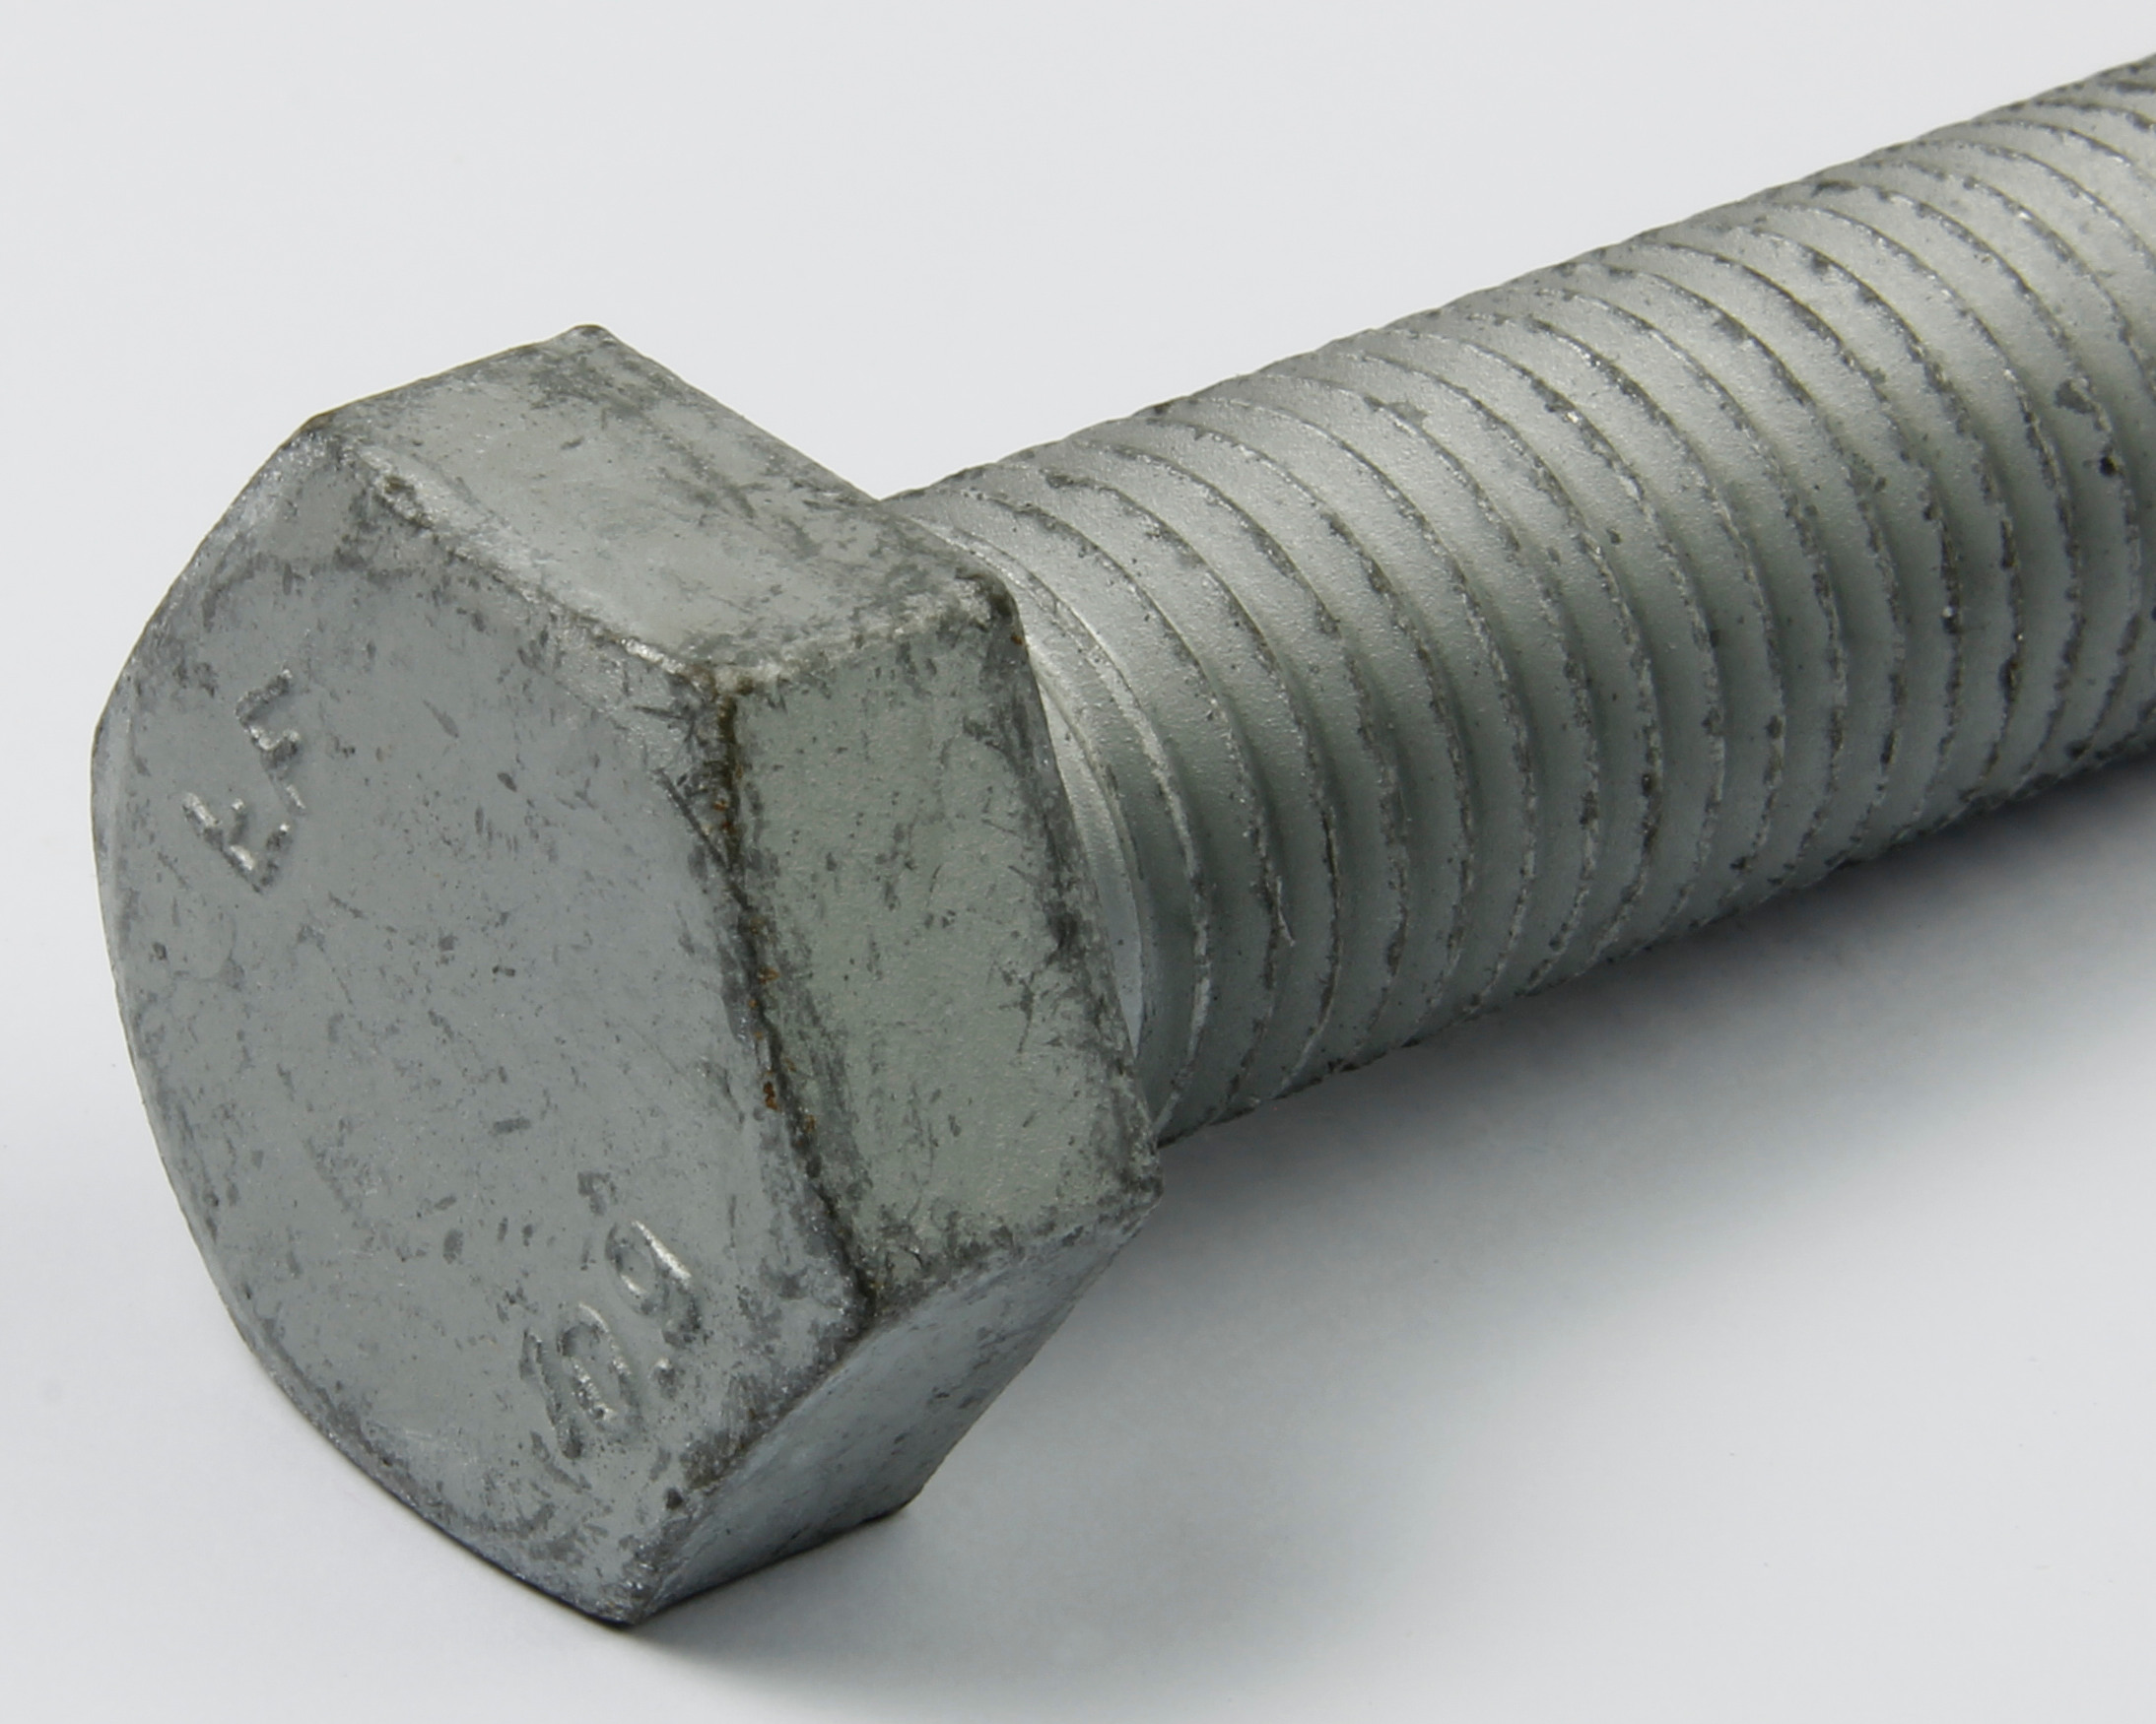 10.9 zinc flake high tensile steel bolt